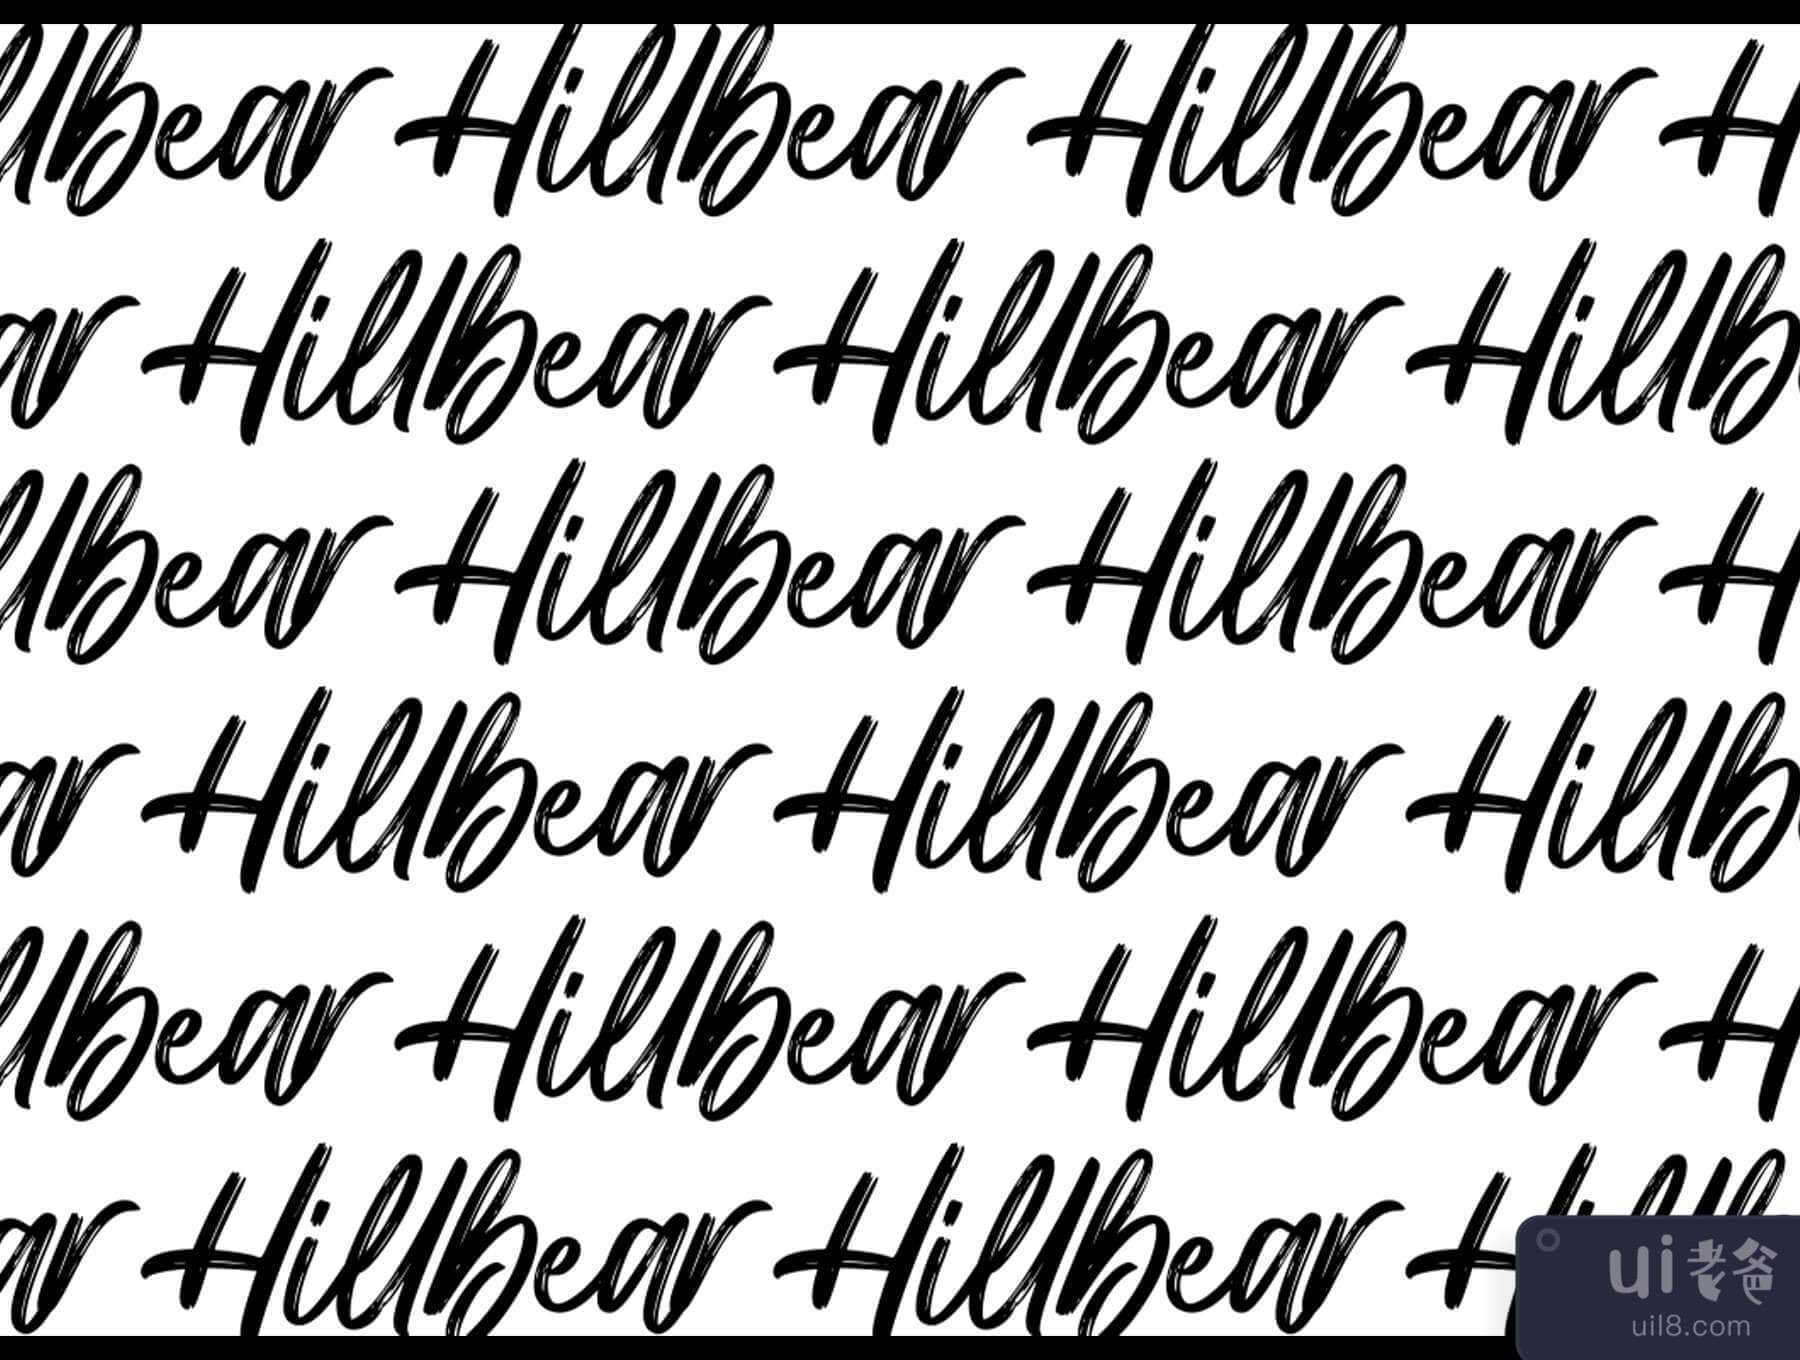 Hillbear - 手写字体 (Hillbear - Handbrush Script Font)插图5